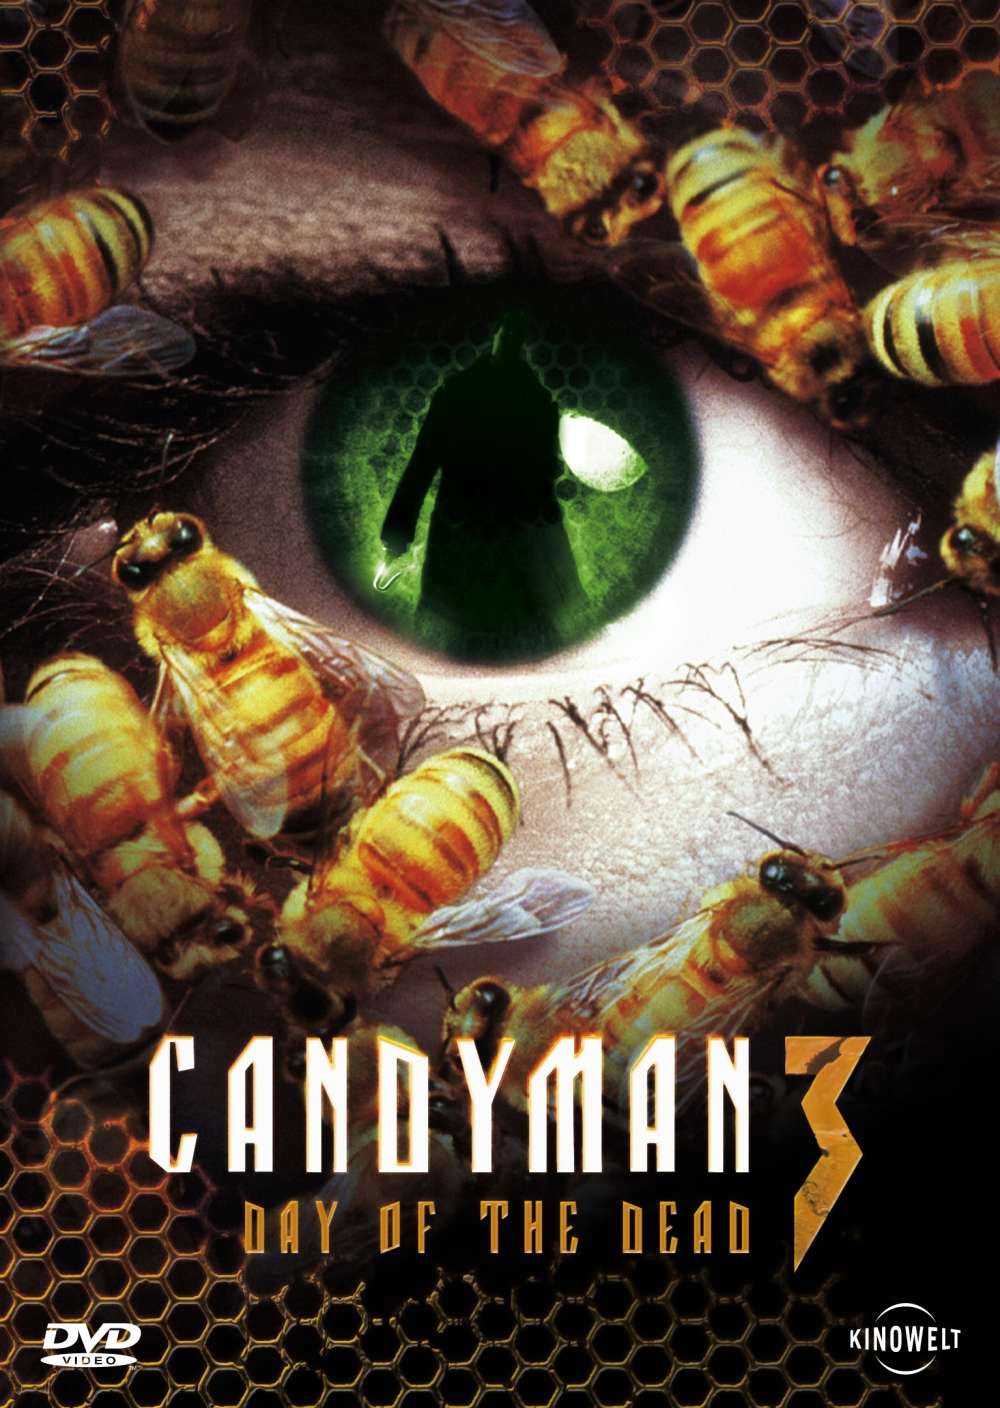 Terror Torrent Candyman 3 Dia dos Mortos (1999)